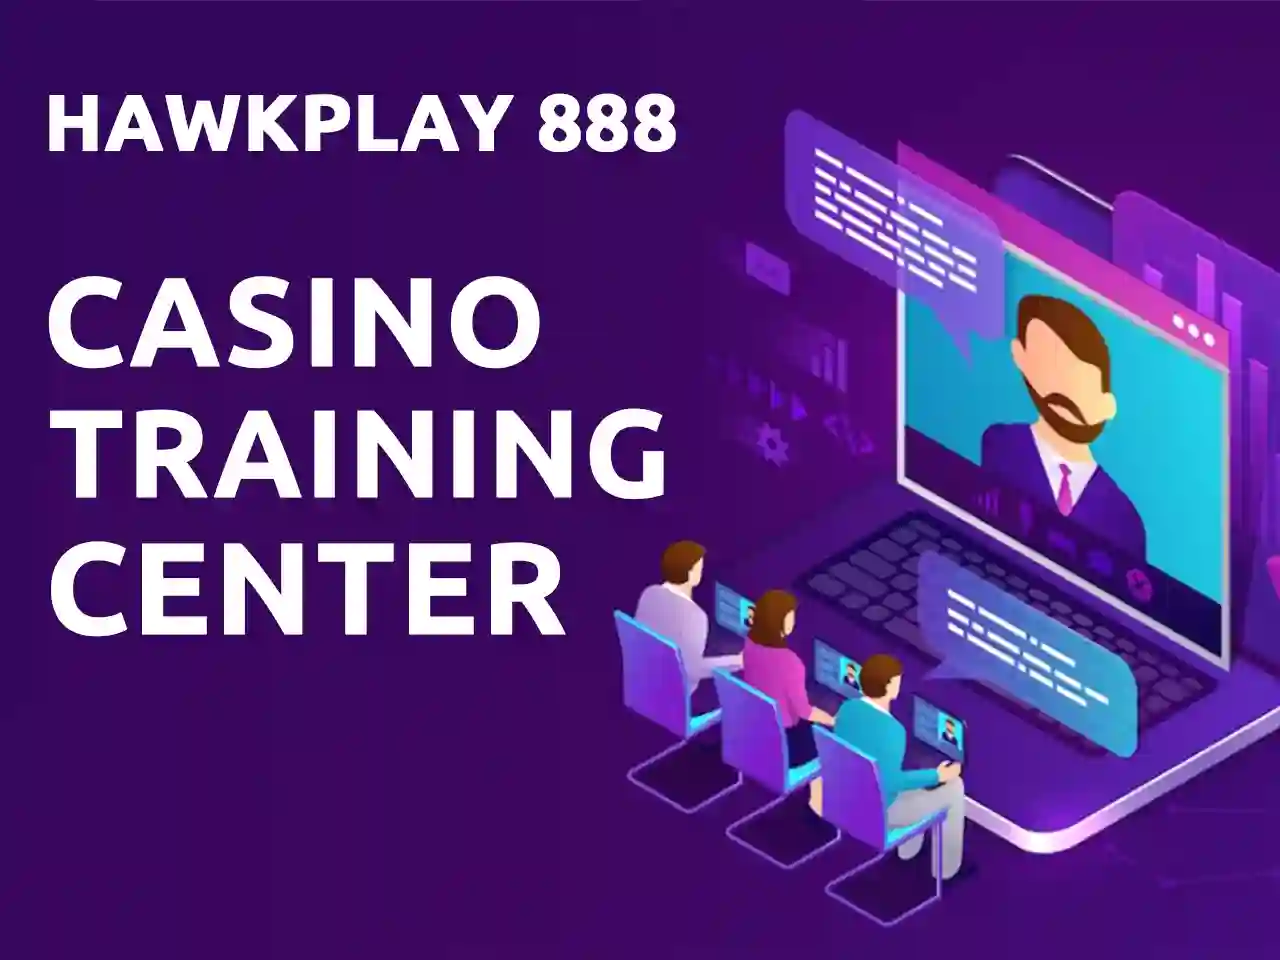 Hawkplay 888 - Your Premier Casino Training Center